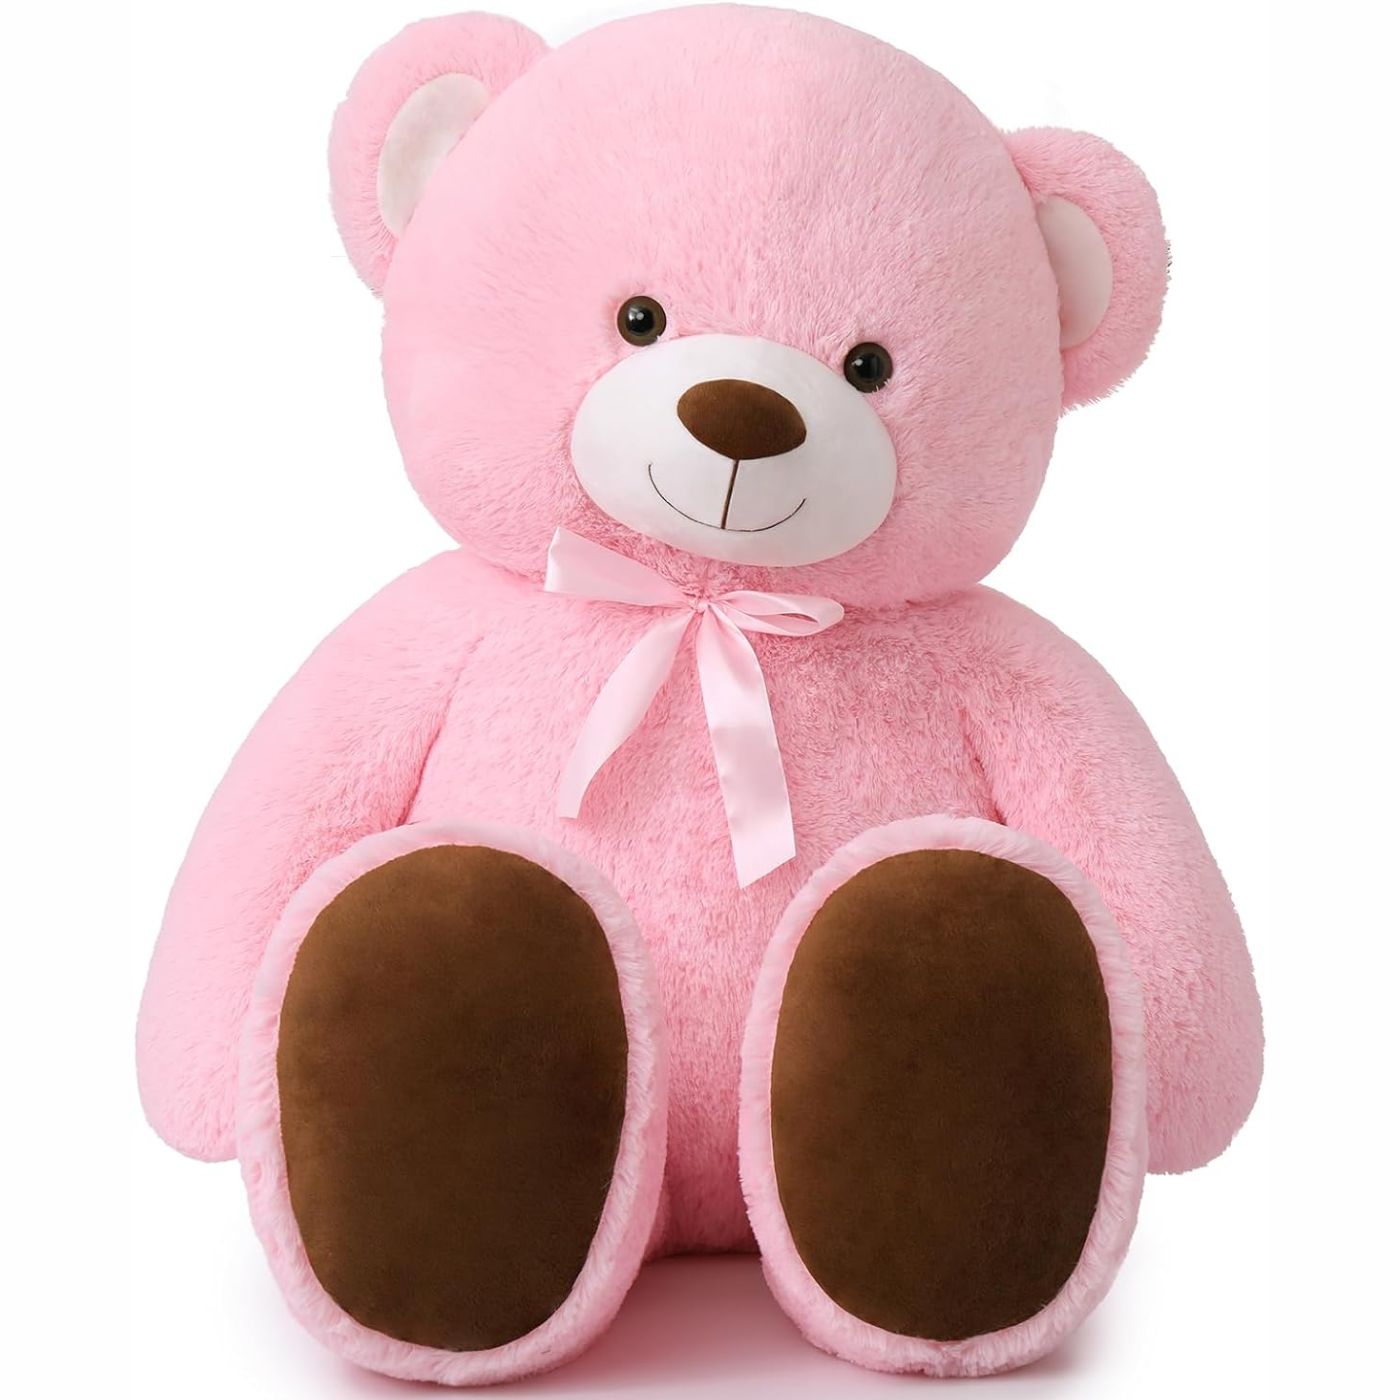 Riesiges Teddybär-Stofftier, mehrfarbig, 41 Zoll